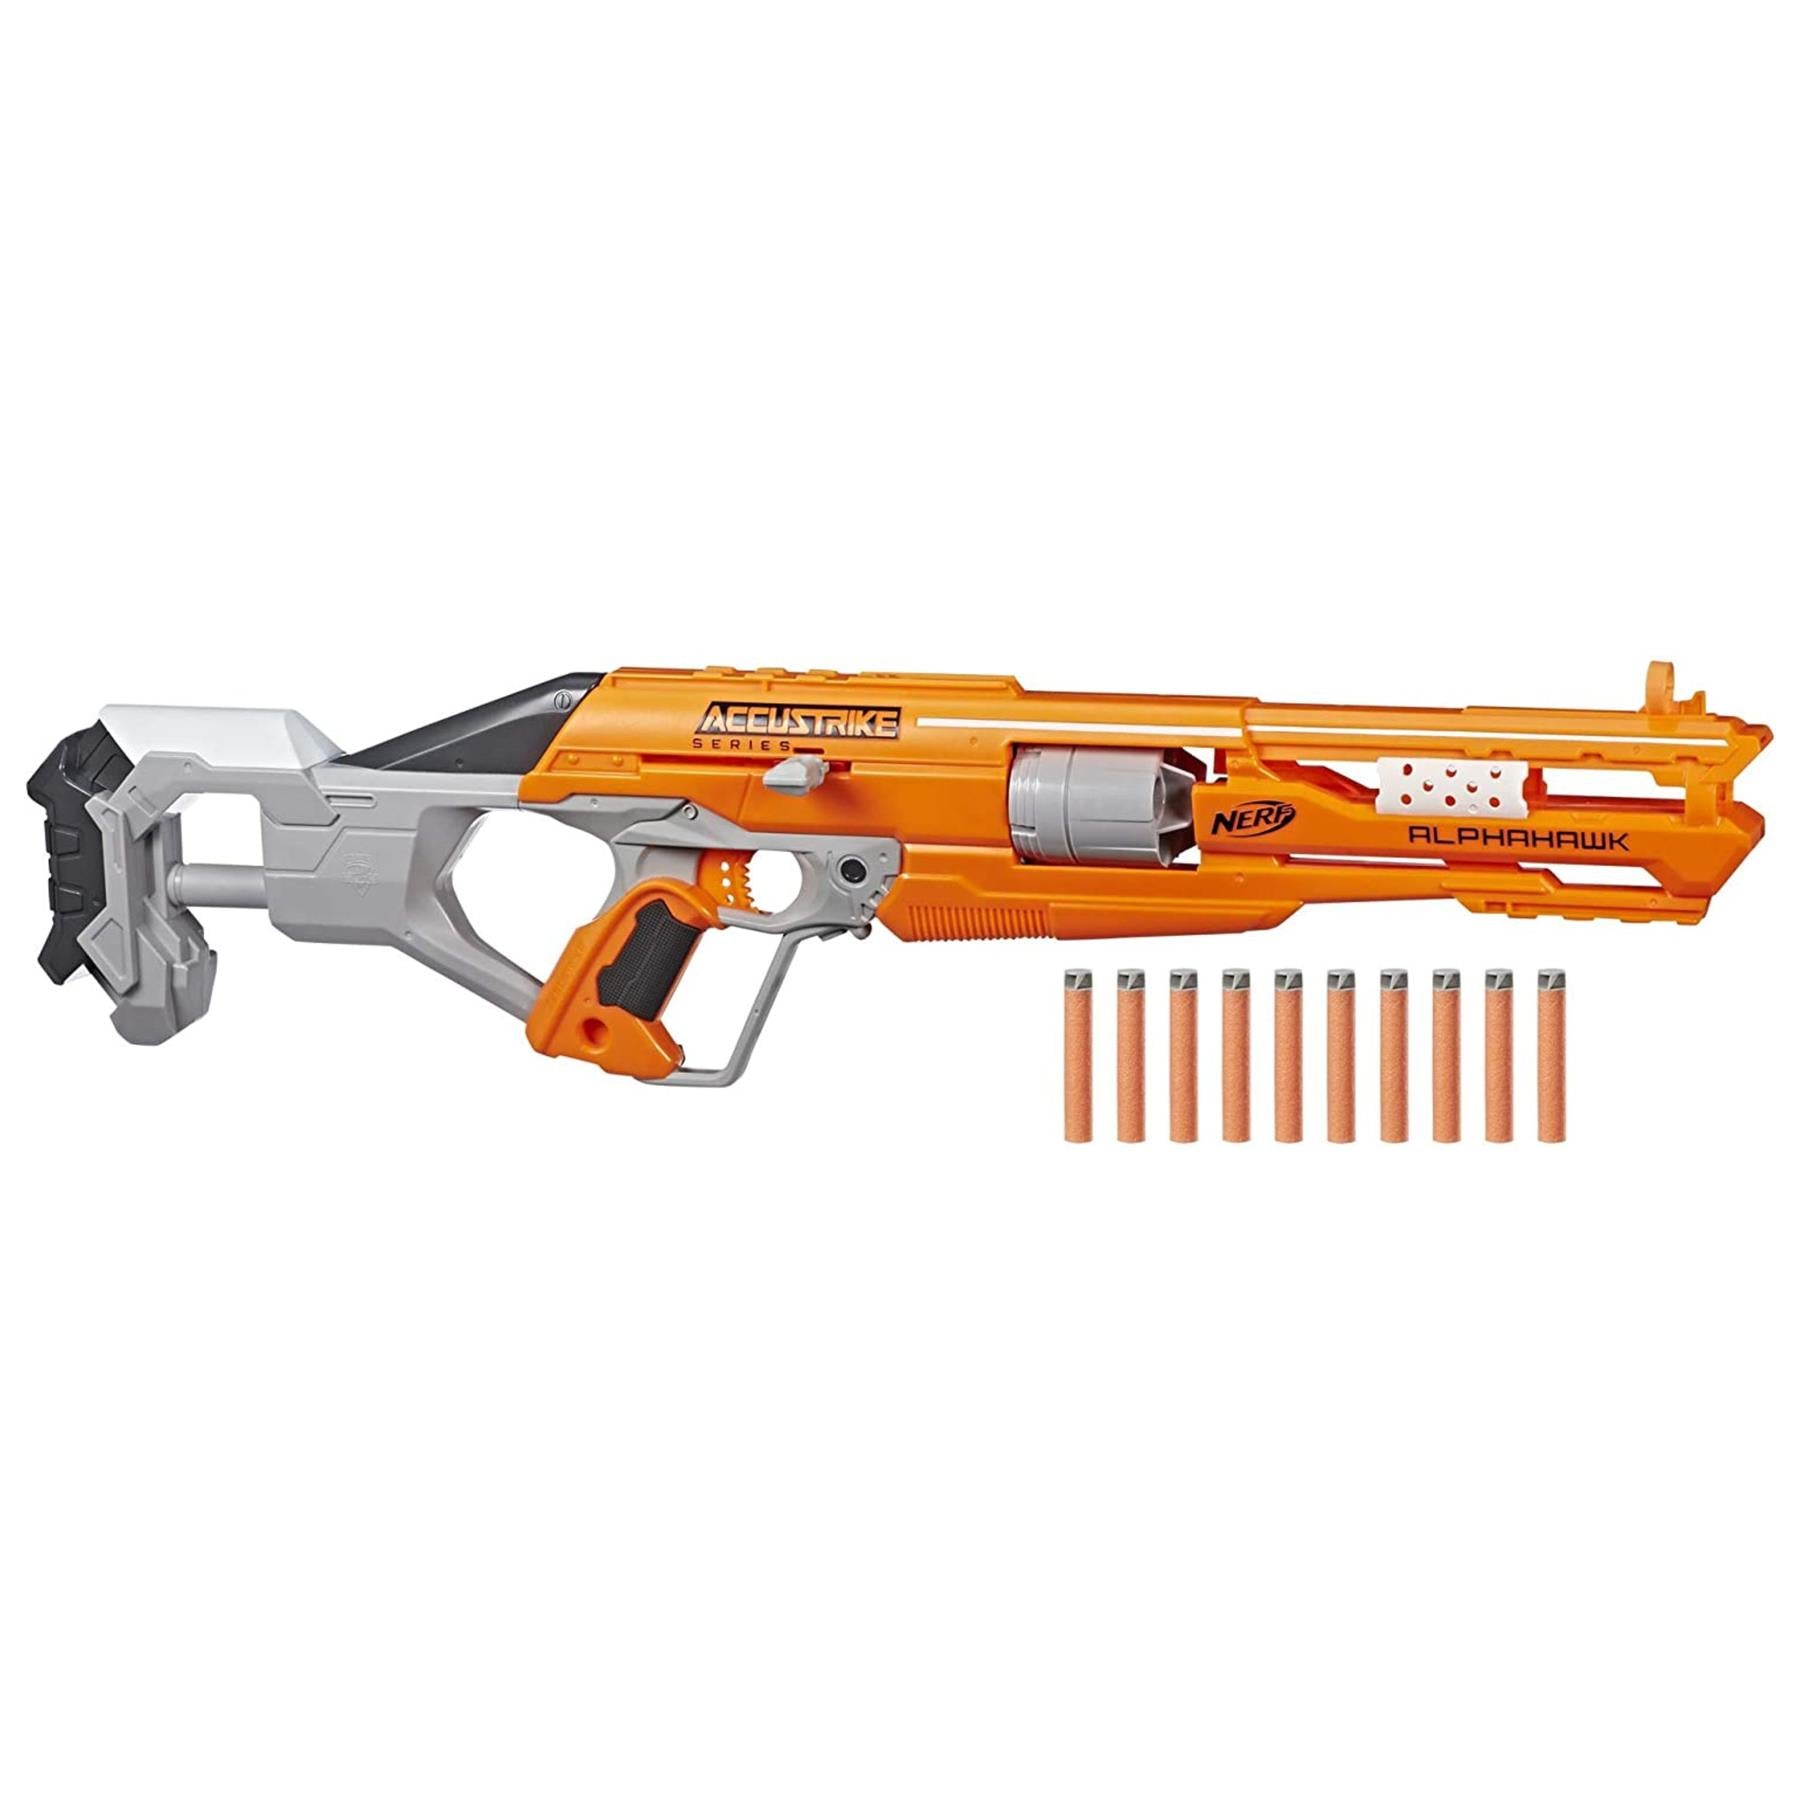 Nerf Nerf Gun Nerf N-Strike Elite Accu Series AlphaHawk Blaster Dart Gun